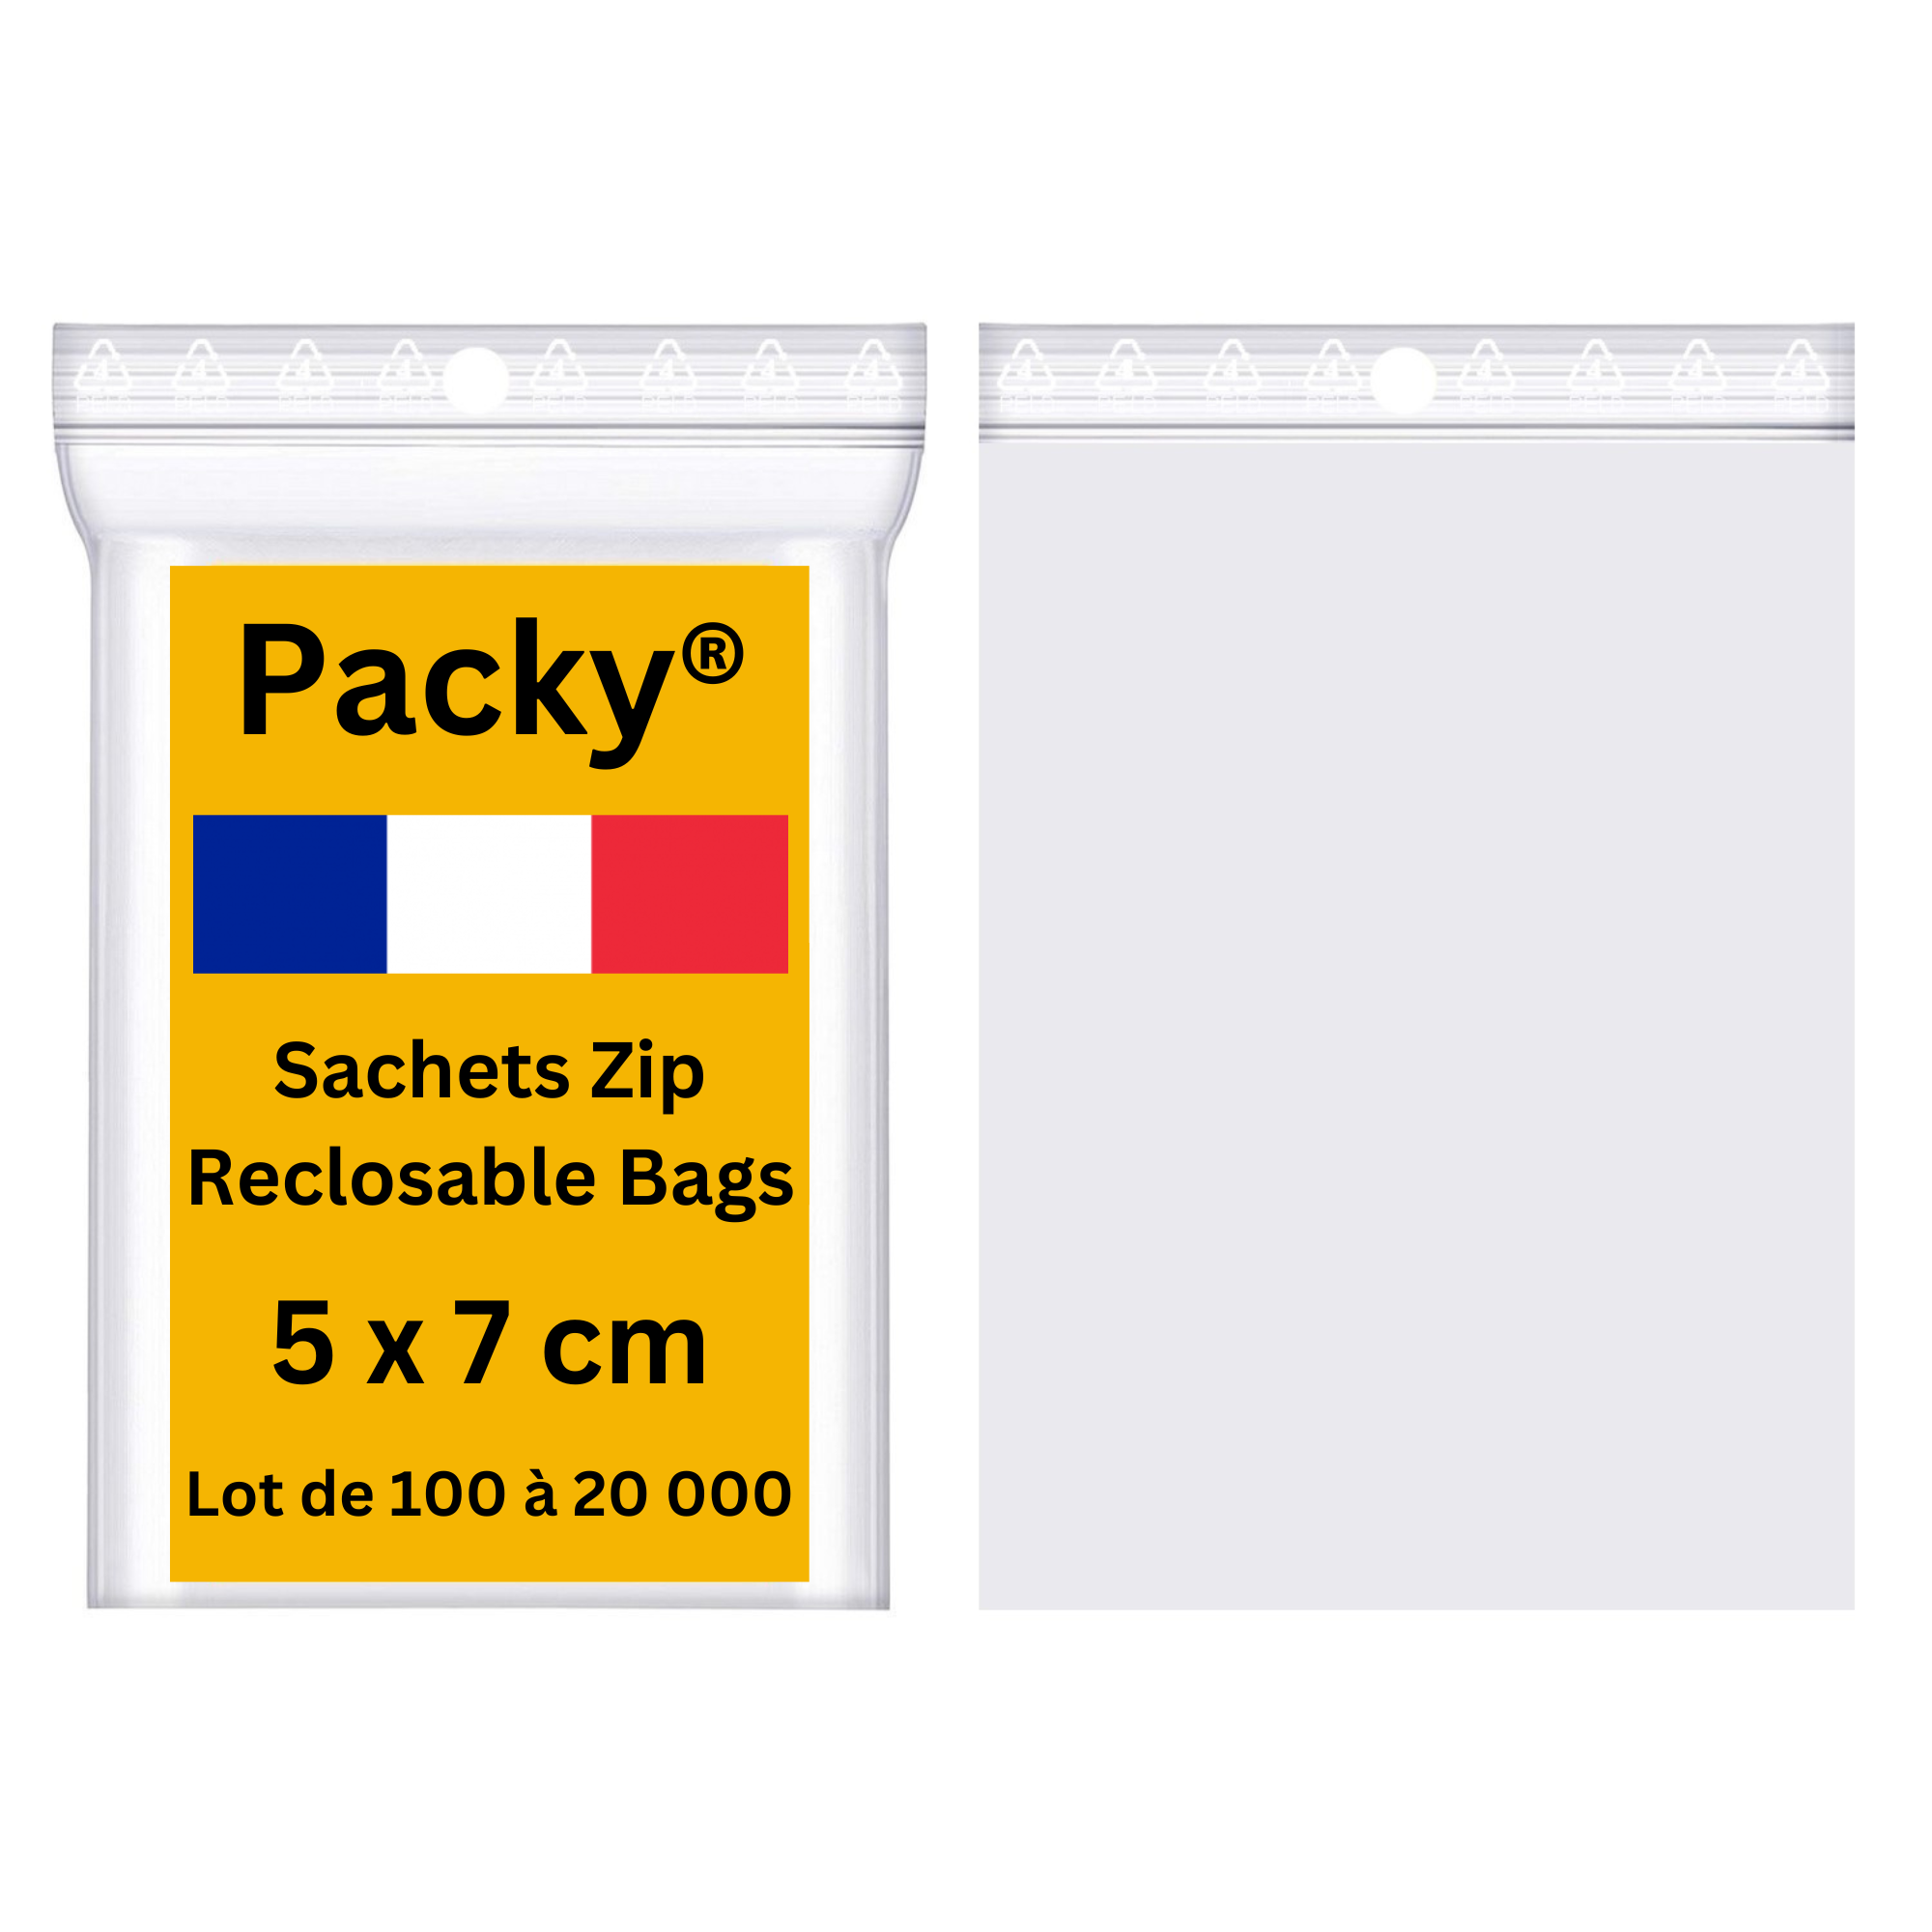 https://www.packy.fr/wp-content/uploads/2022/05/Sachets-Zip-Neutre-5x7cm.png